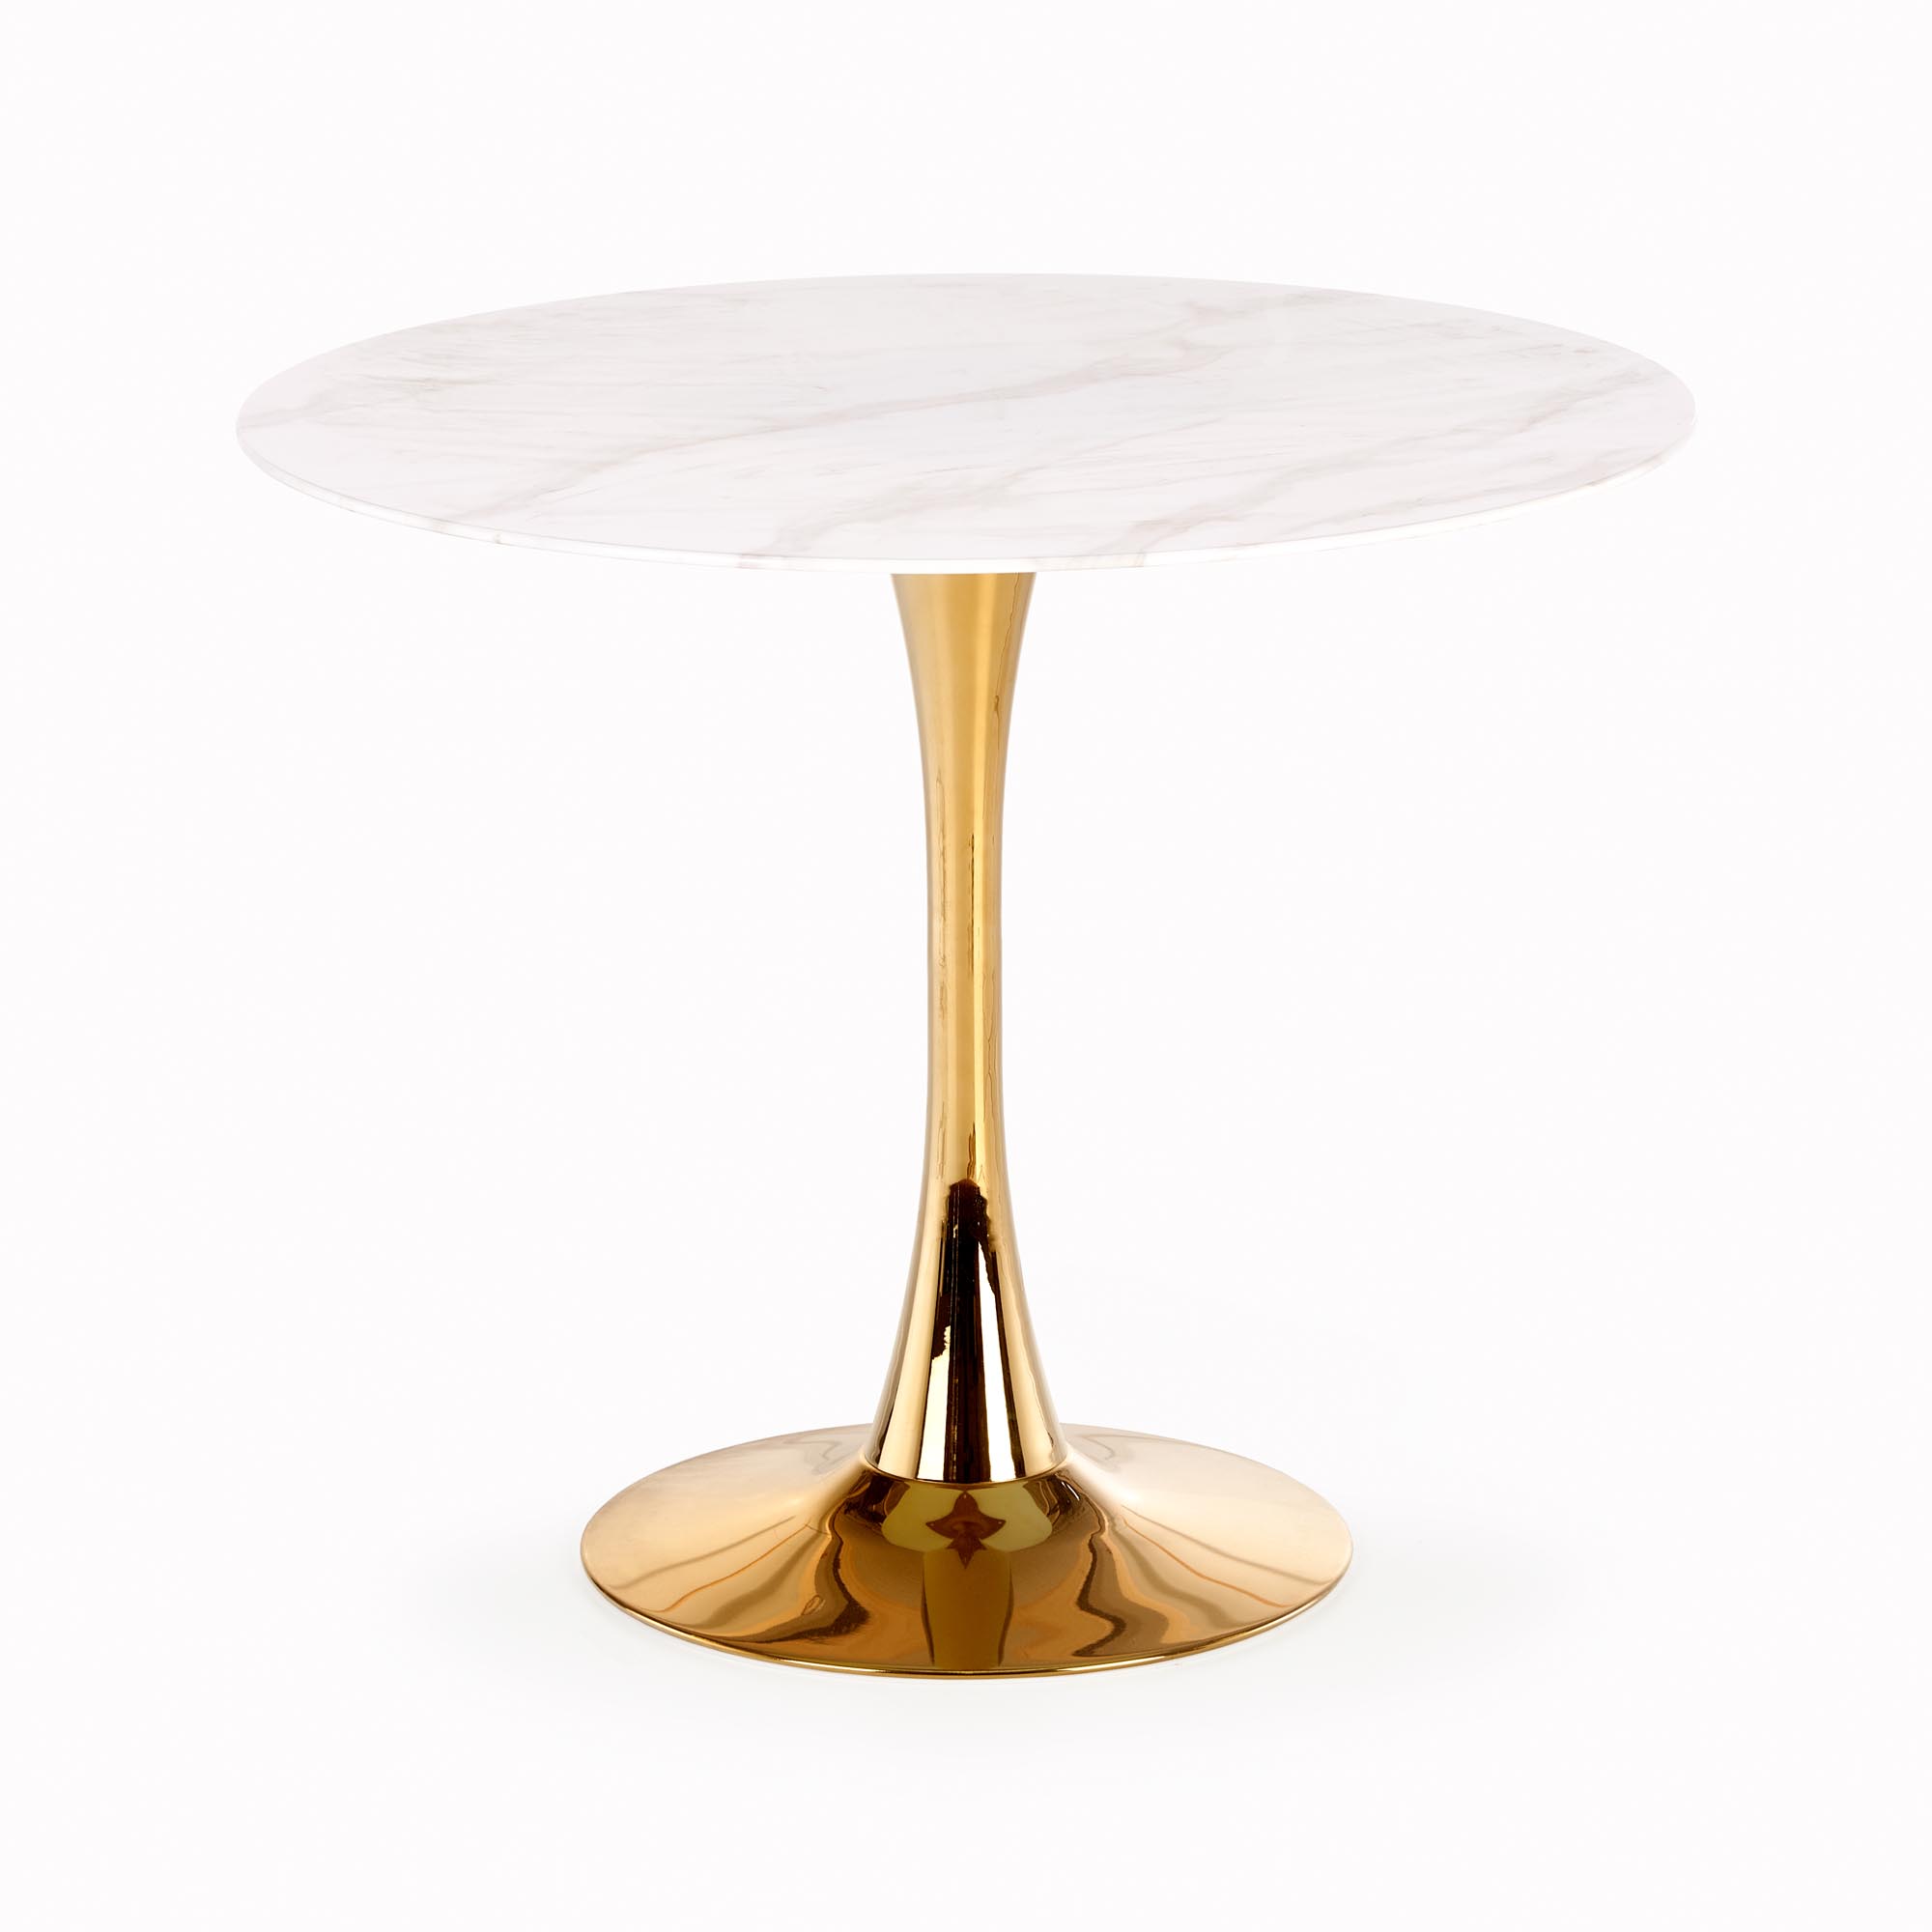 CASEMIRO Stůl Deska - Bílý mramor, noga - Žlutý stůl casemiro - Bílý mramor / Žlutý